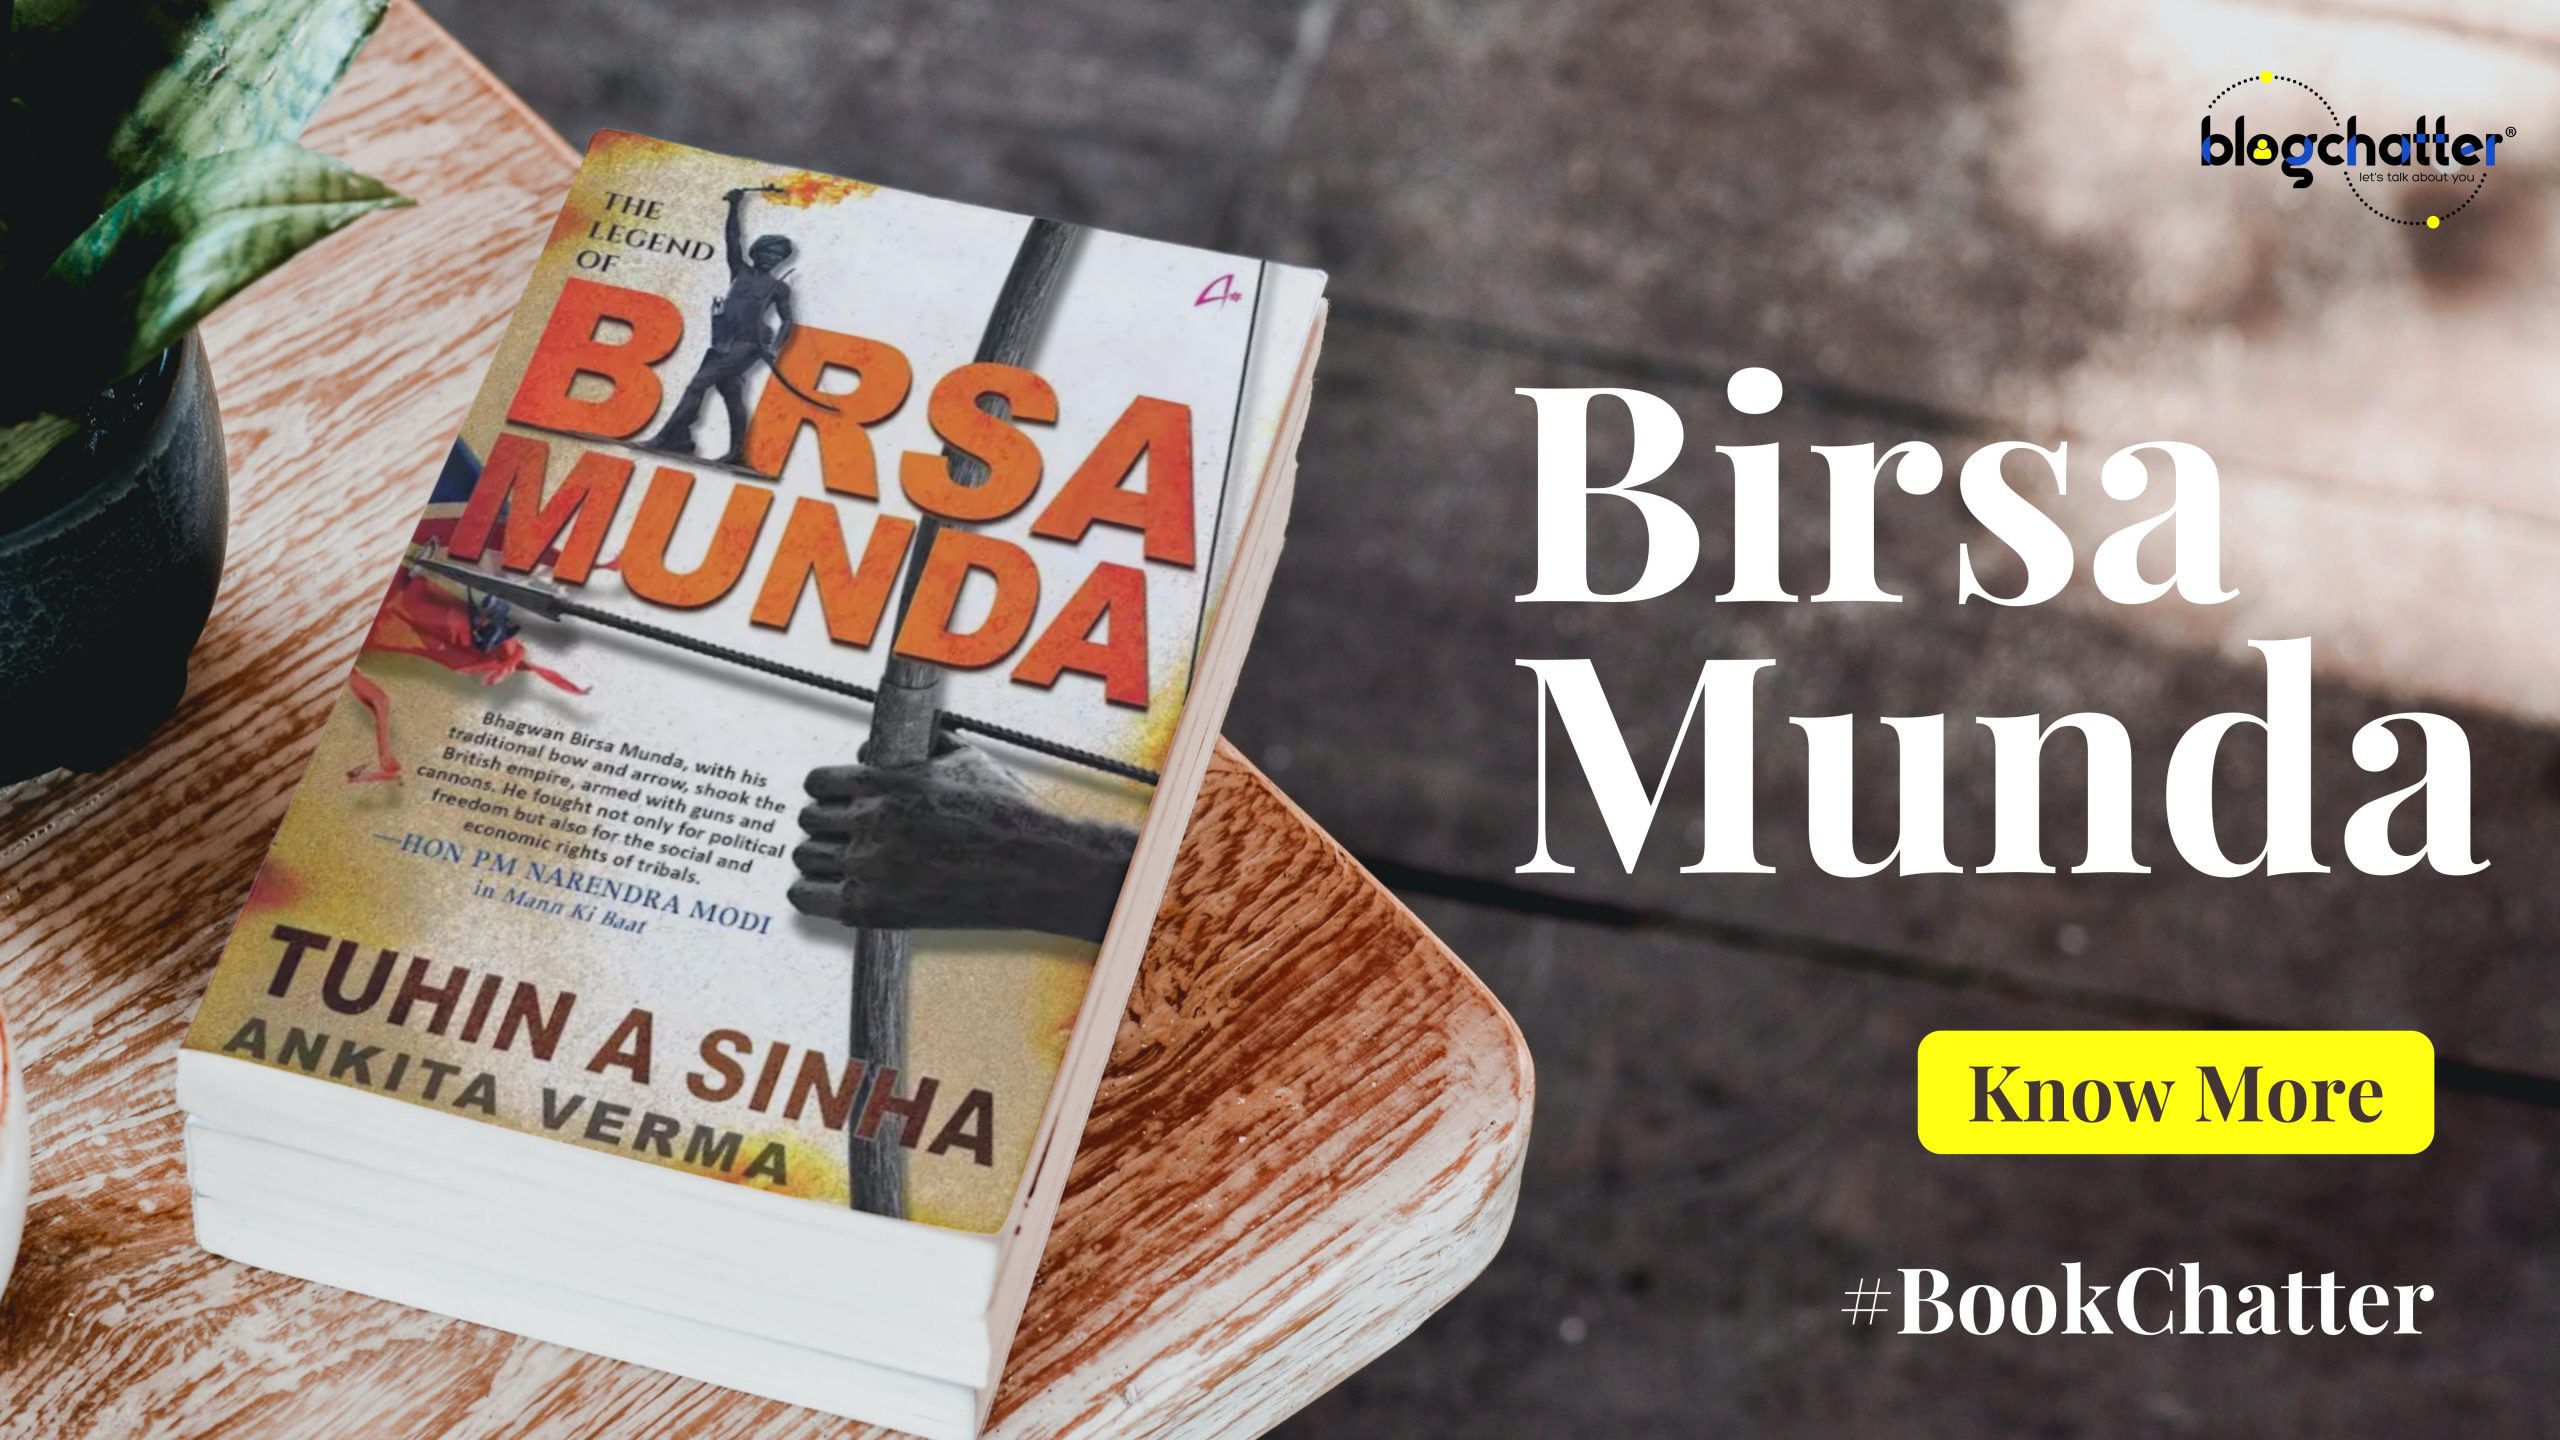 The Legend of Birsa Munda by Tuhin A. Sinha and Ankita Verma